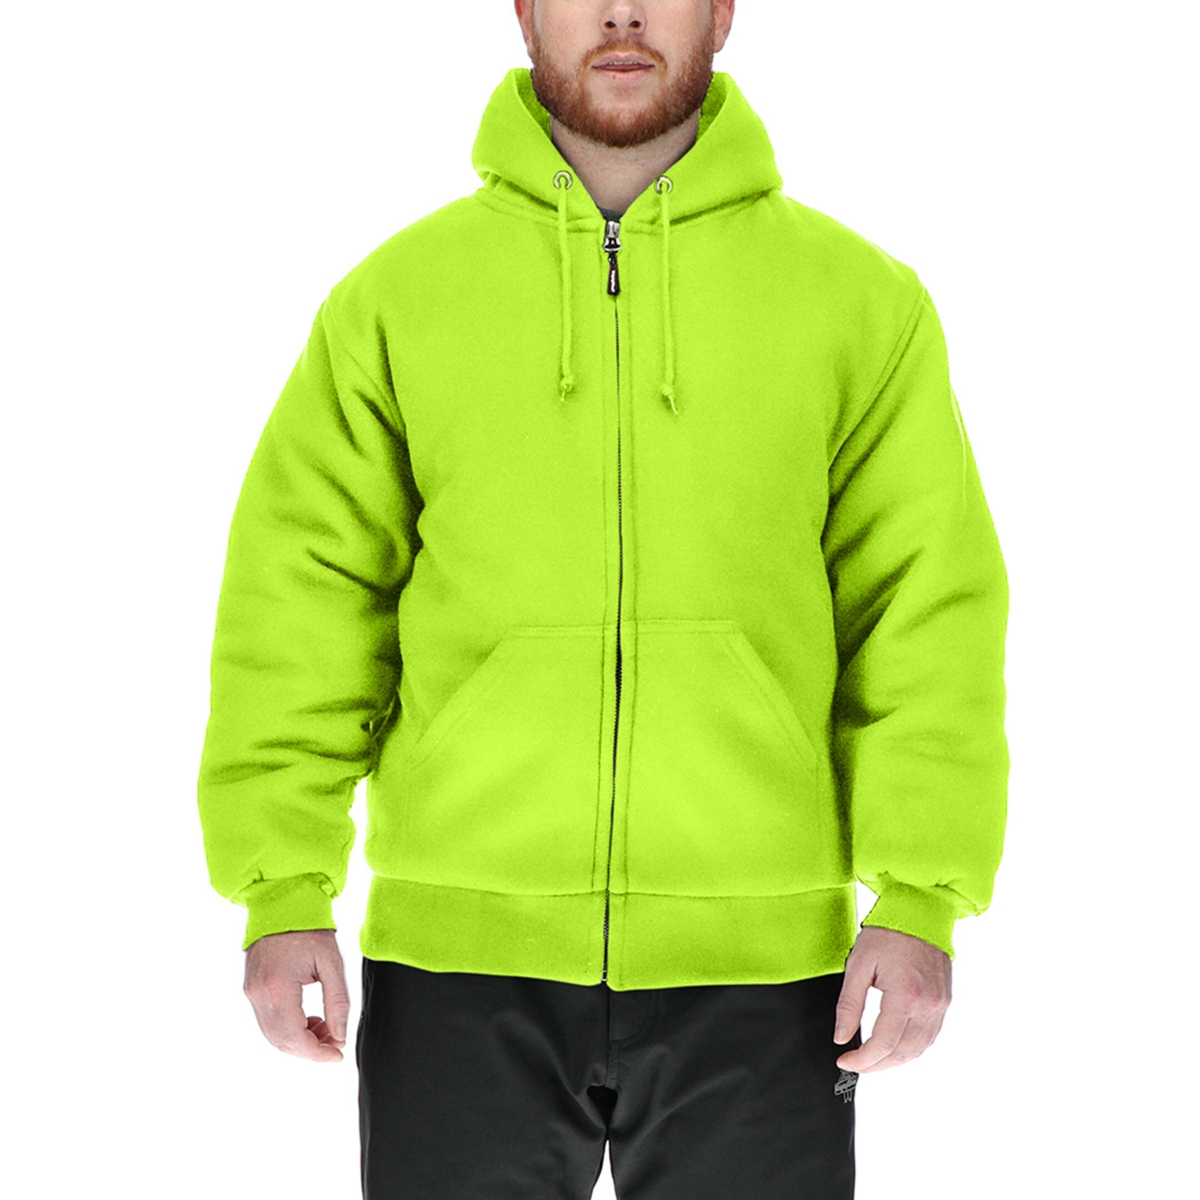 Men's Insulated Hooded Sweatshirt - Lime